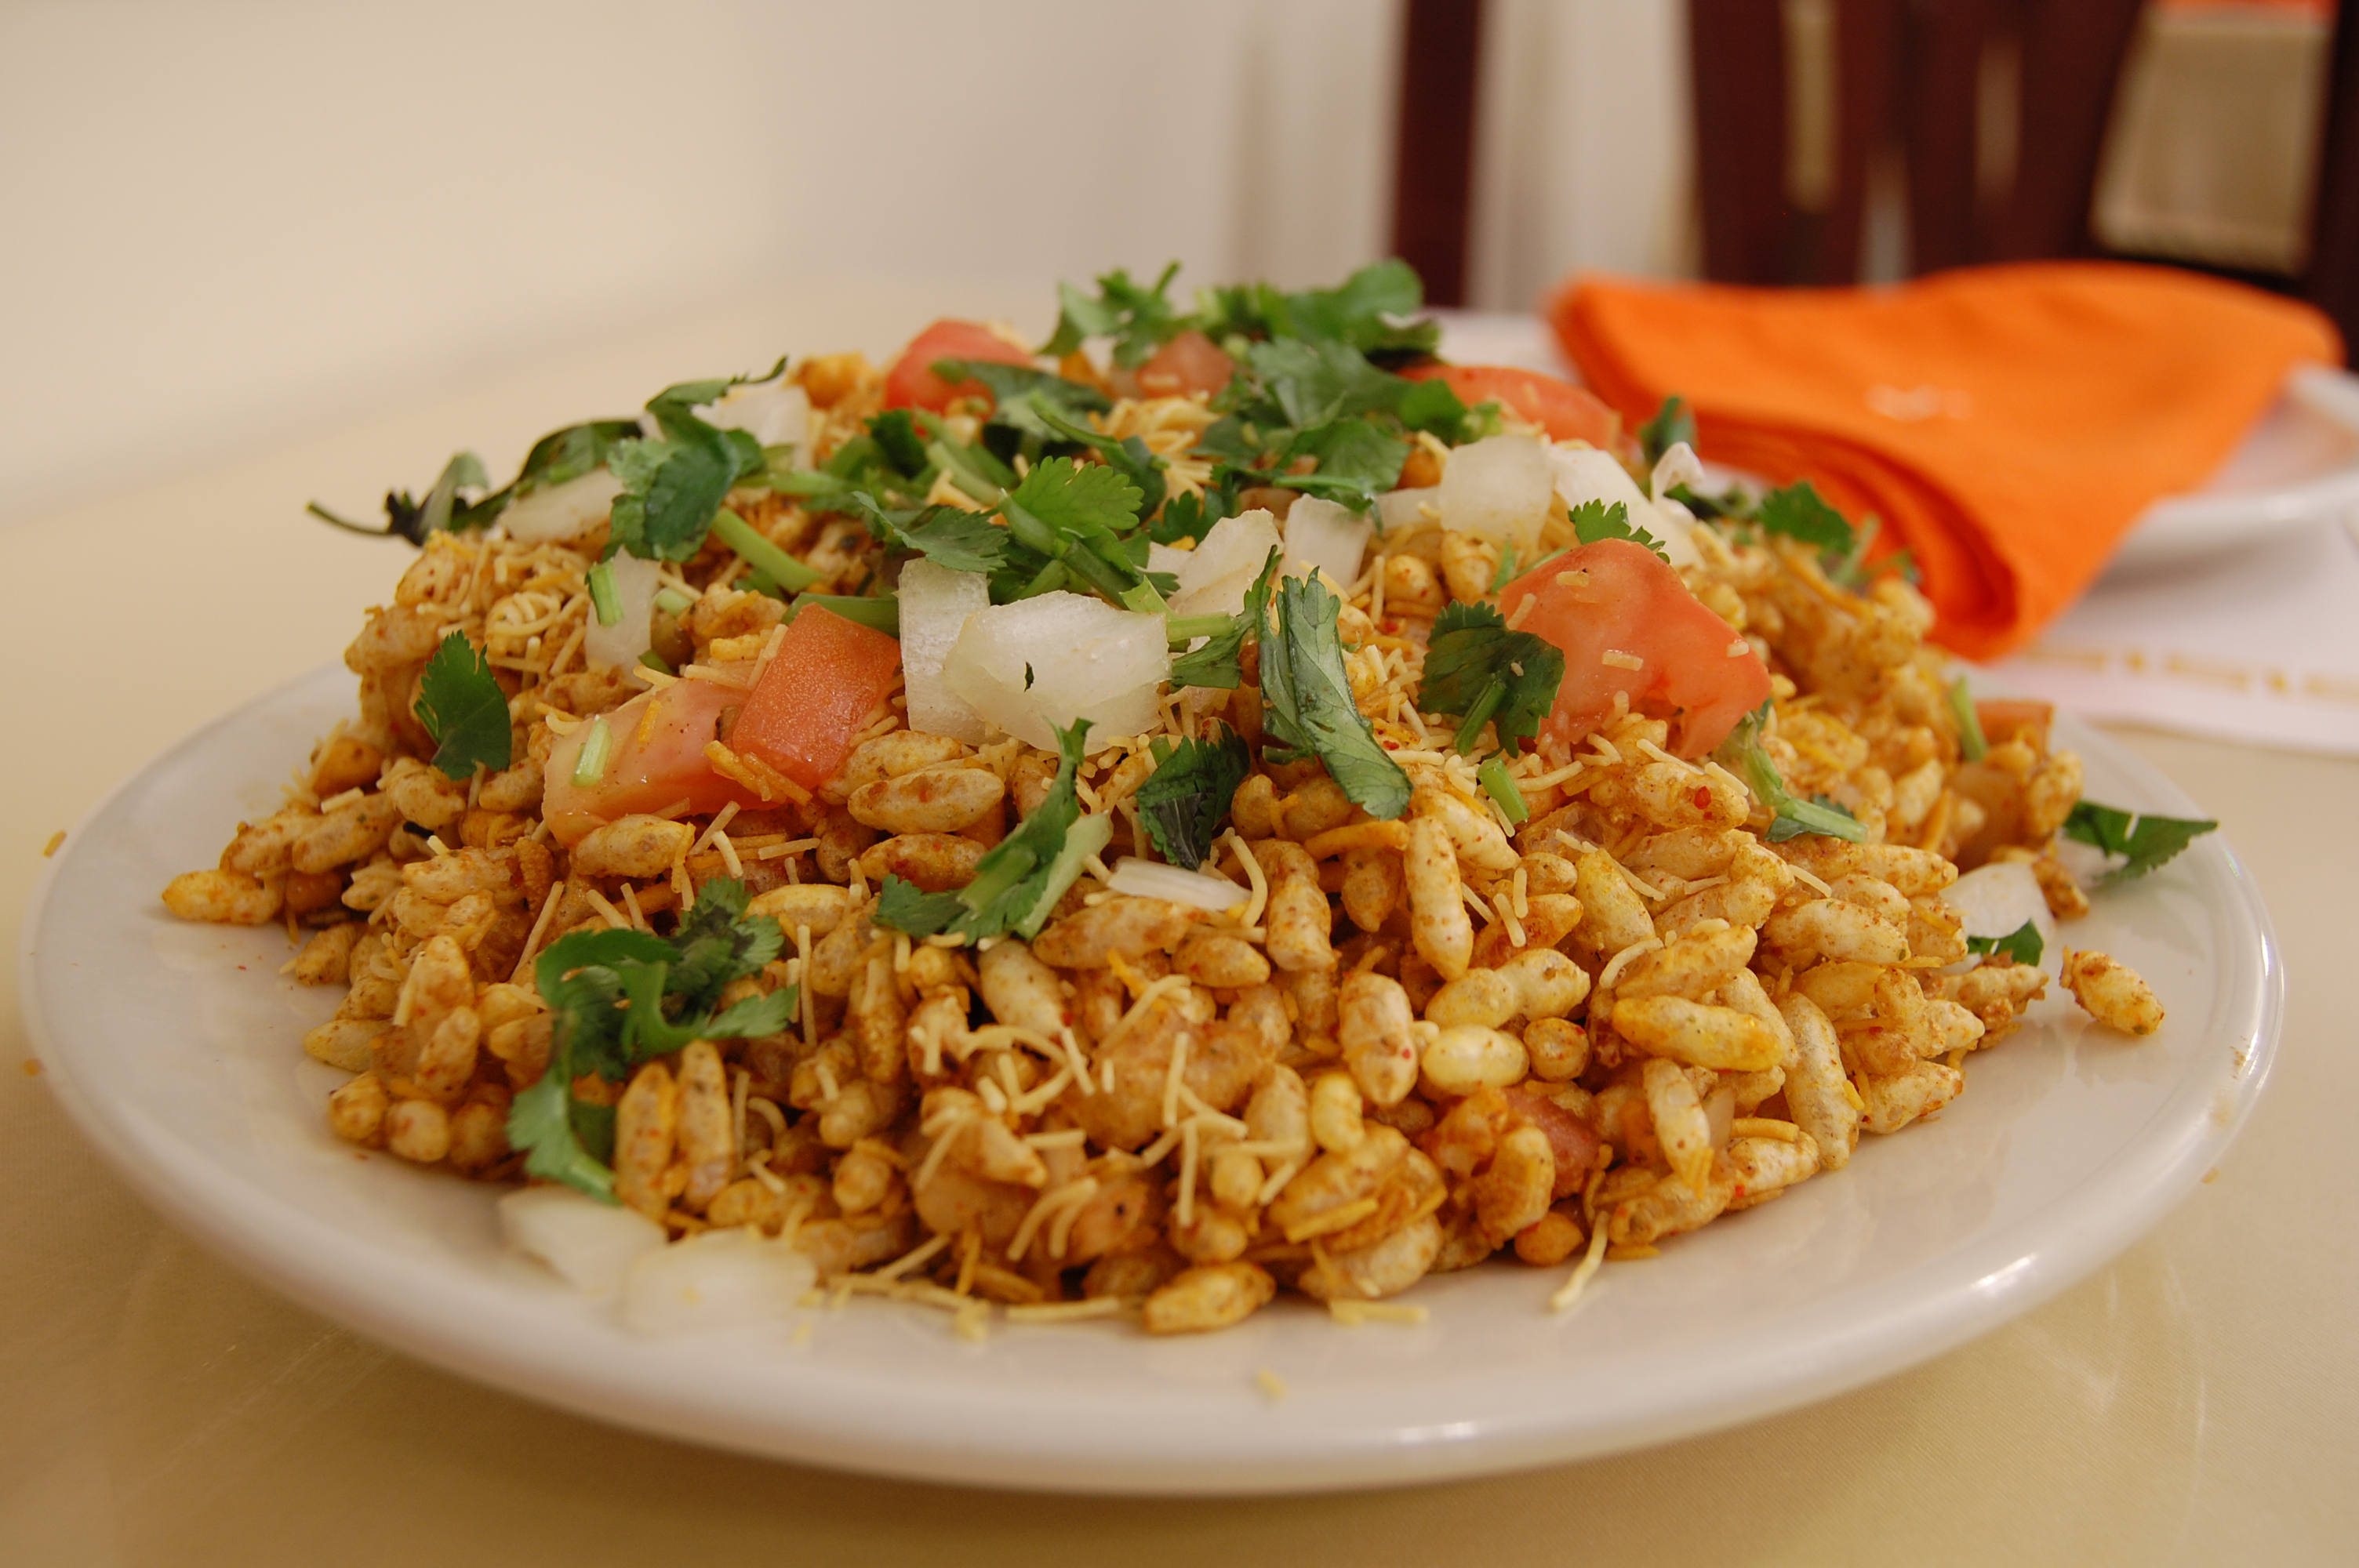 https://commons.wikimedia.org/wiki/File:Indian_cuisine-Chaat-Bhelpuri-03.jpg